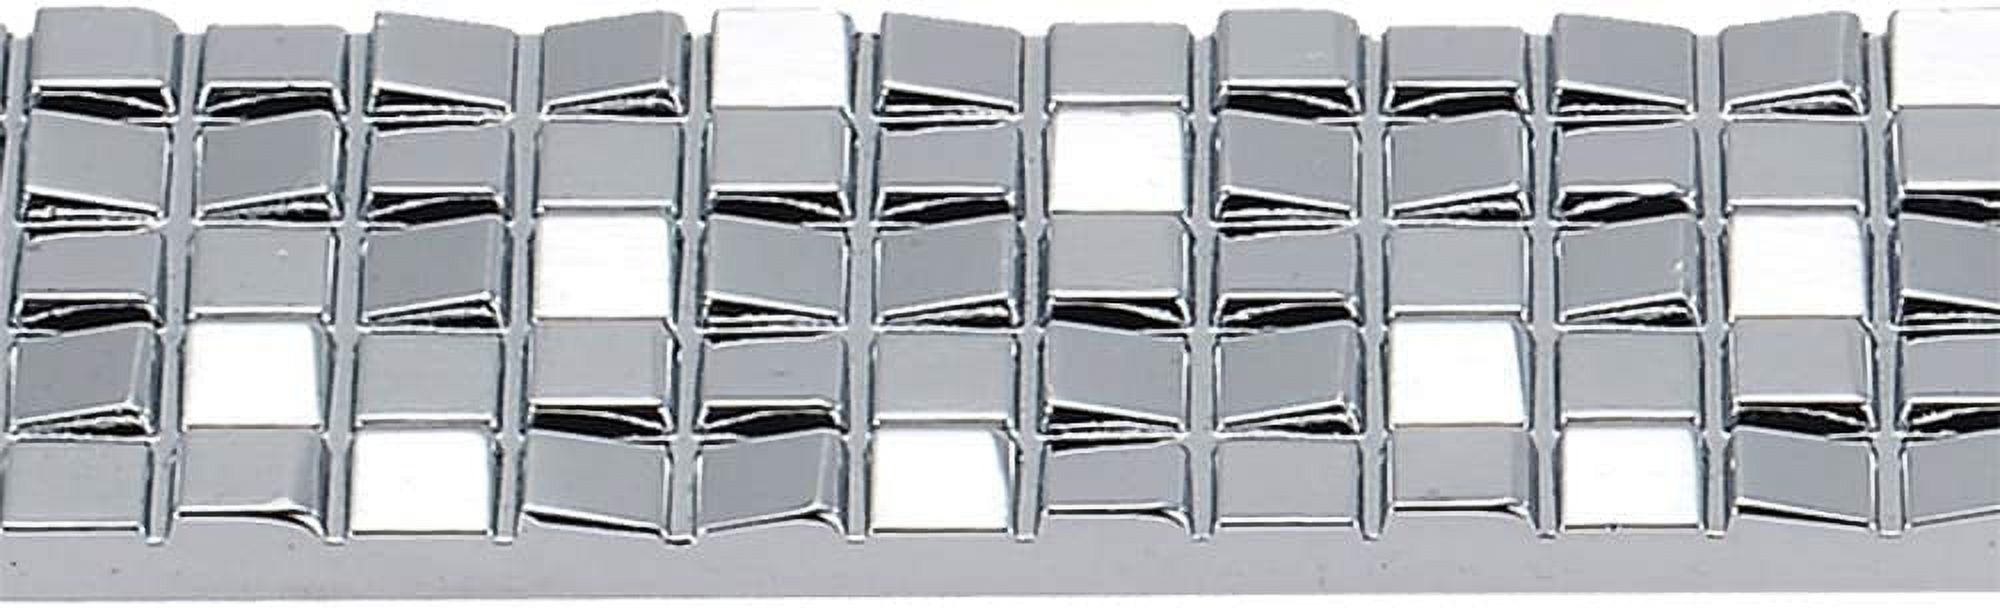 10 Pack MOOD.SC Mosaic Konbs Silver Chrome Kitchen Cabinet Knobs Handle Pull Knobs Door Dresser Drawer Pulls Handles Furniture Cupboard Hardware (Knob) - image 3 of 7